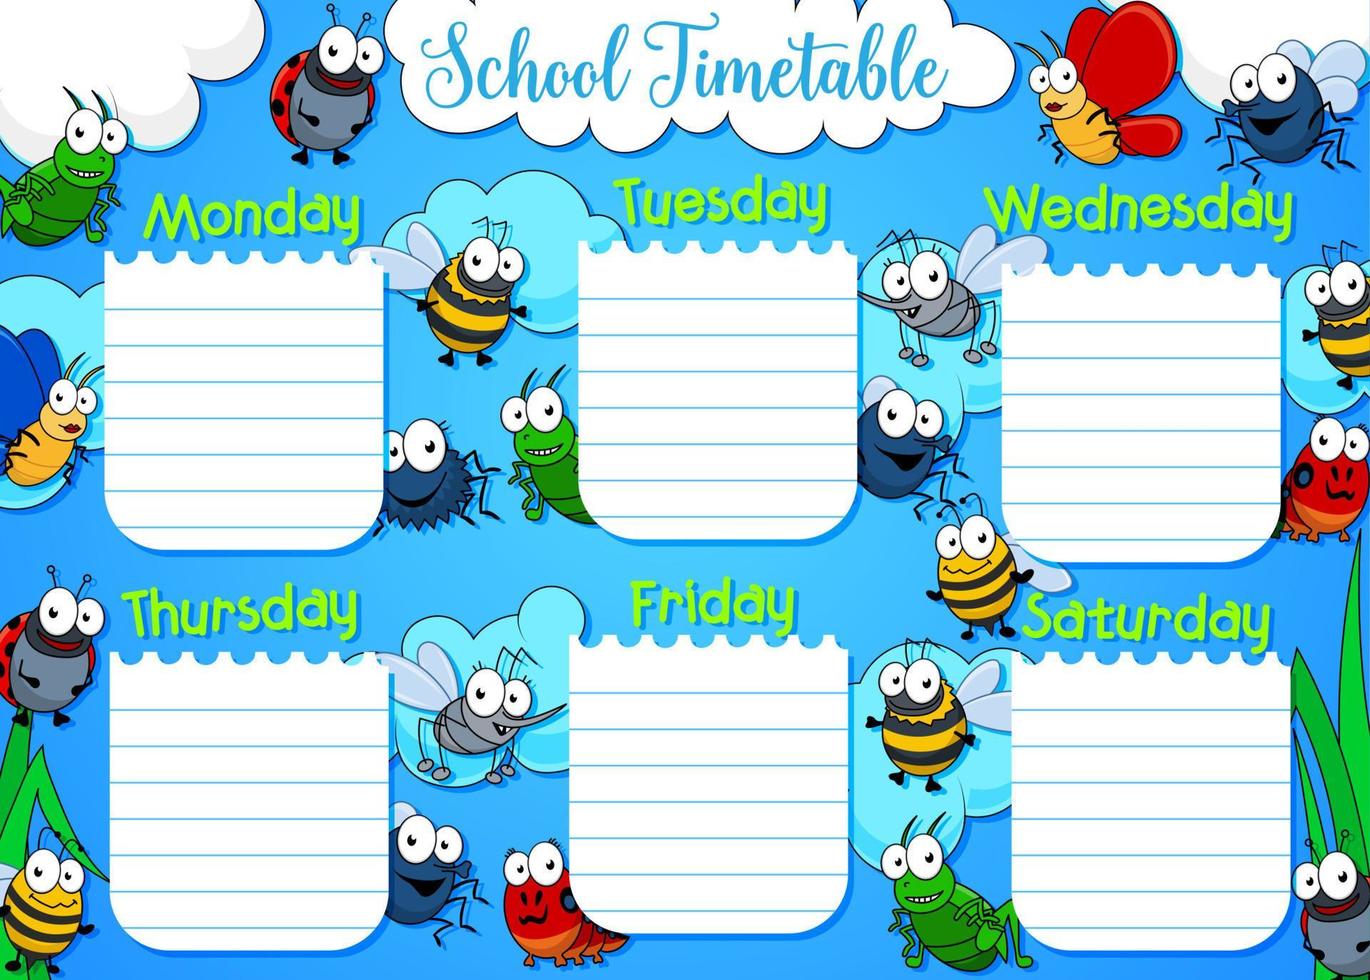 School timetable week schedule, cartoon insects vector